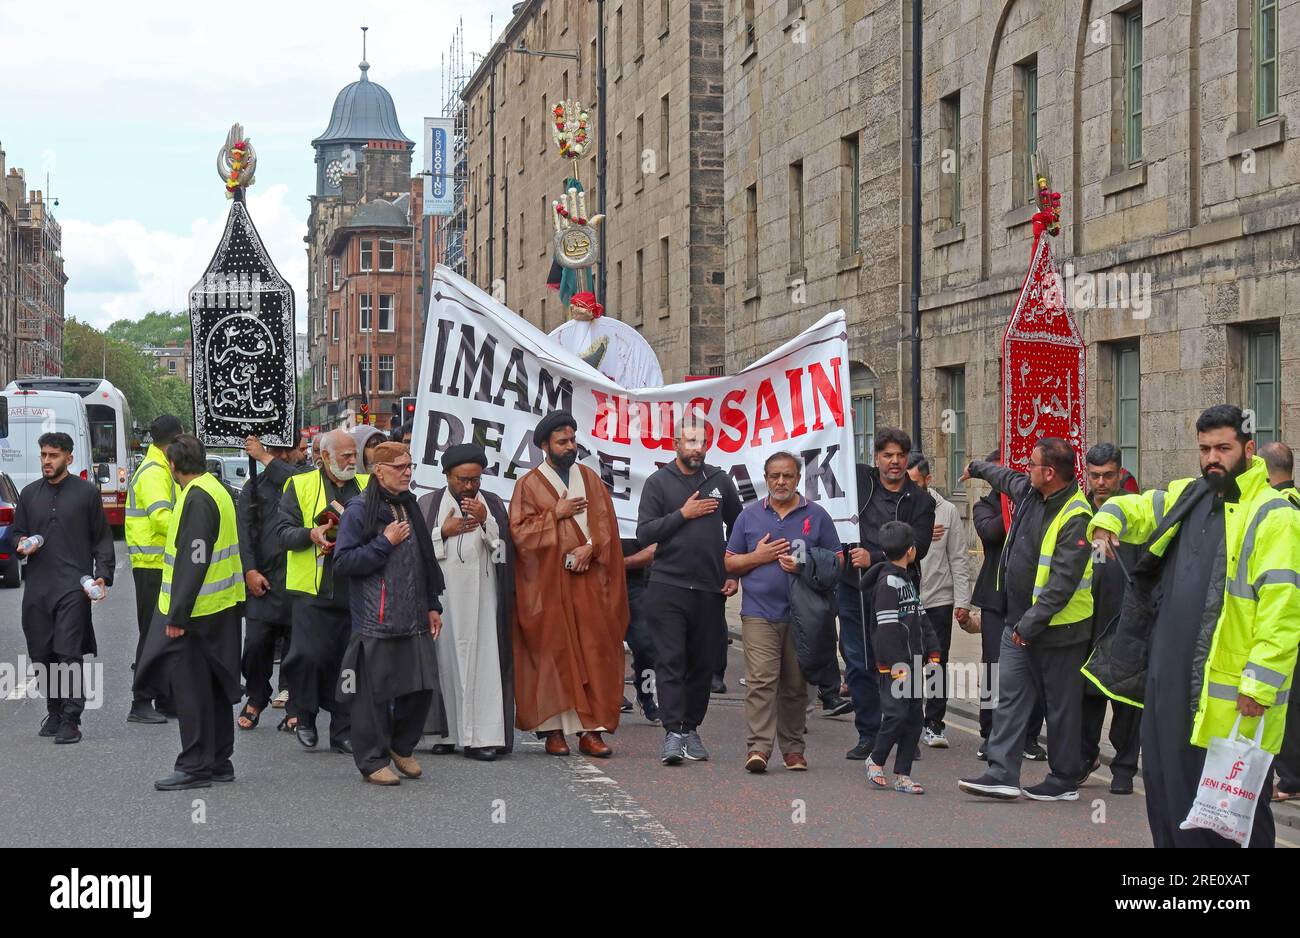 Scottish Shia Muslim, Imam Hussain Peace Walk, Reading Quran Through 36 Great Jct Street, Leith, Edimburgo, Scozia, Regno Unito, EH6 5LA Foto Stock